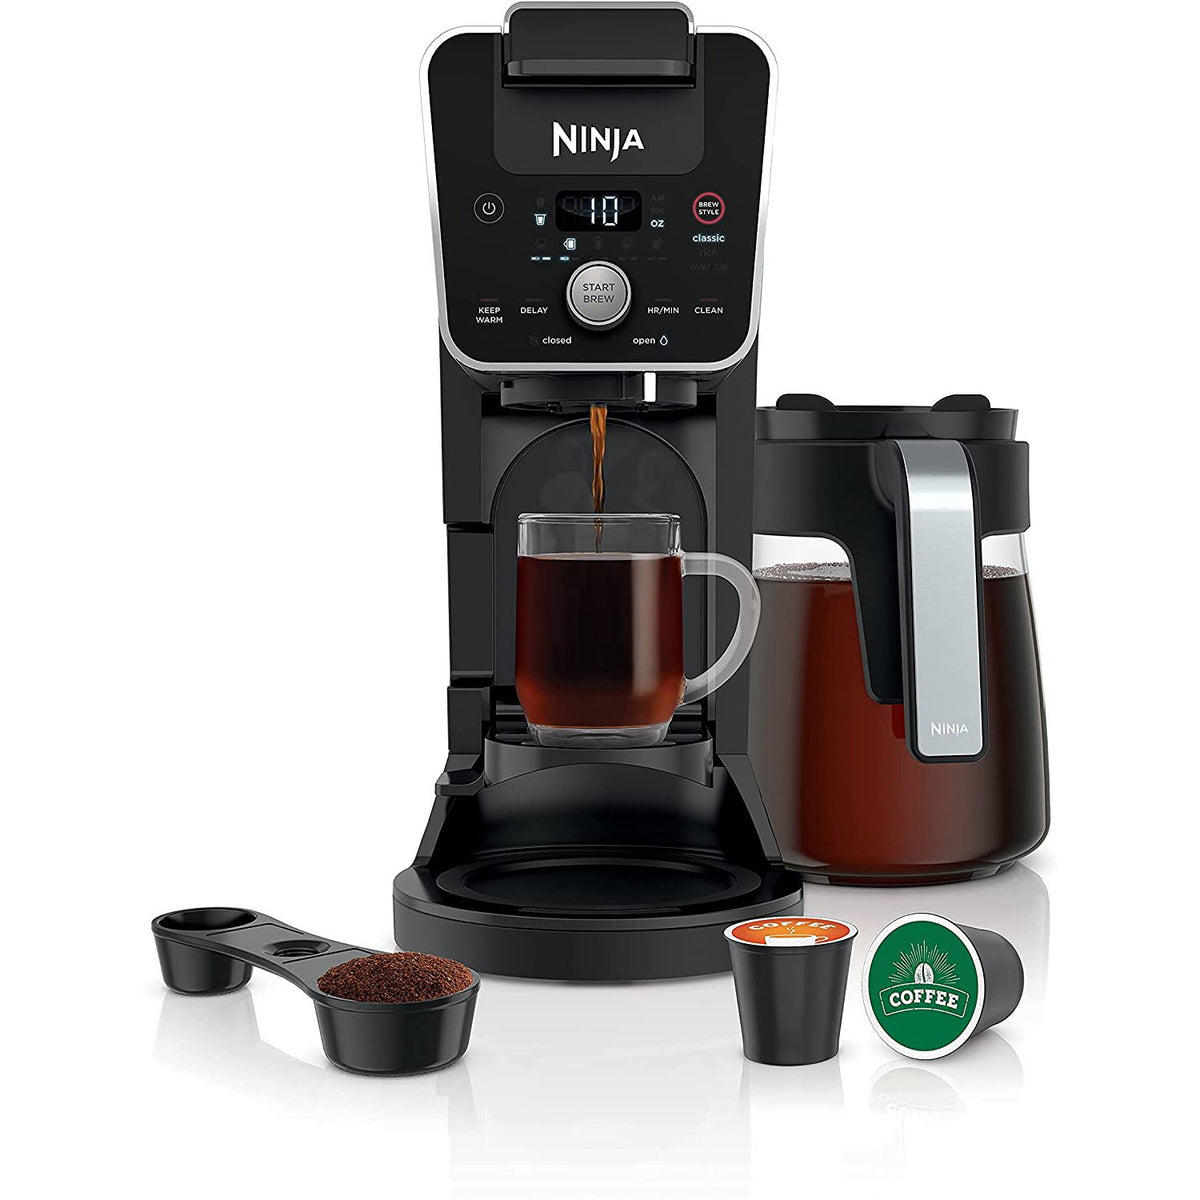 Ninja Dual Brew Coffee Maker: Make Delicious Coffee At Home